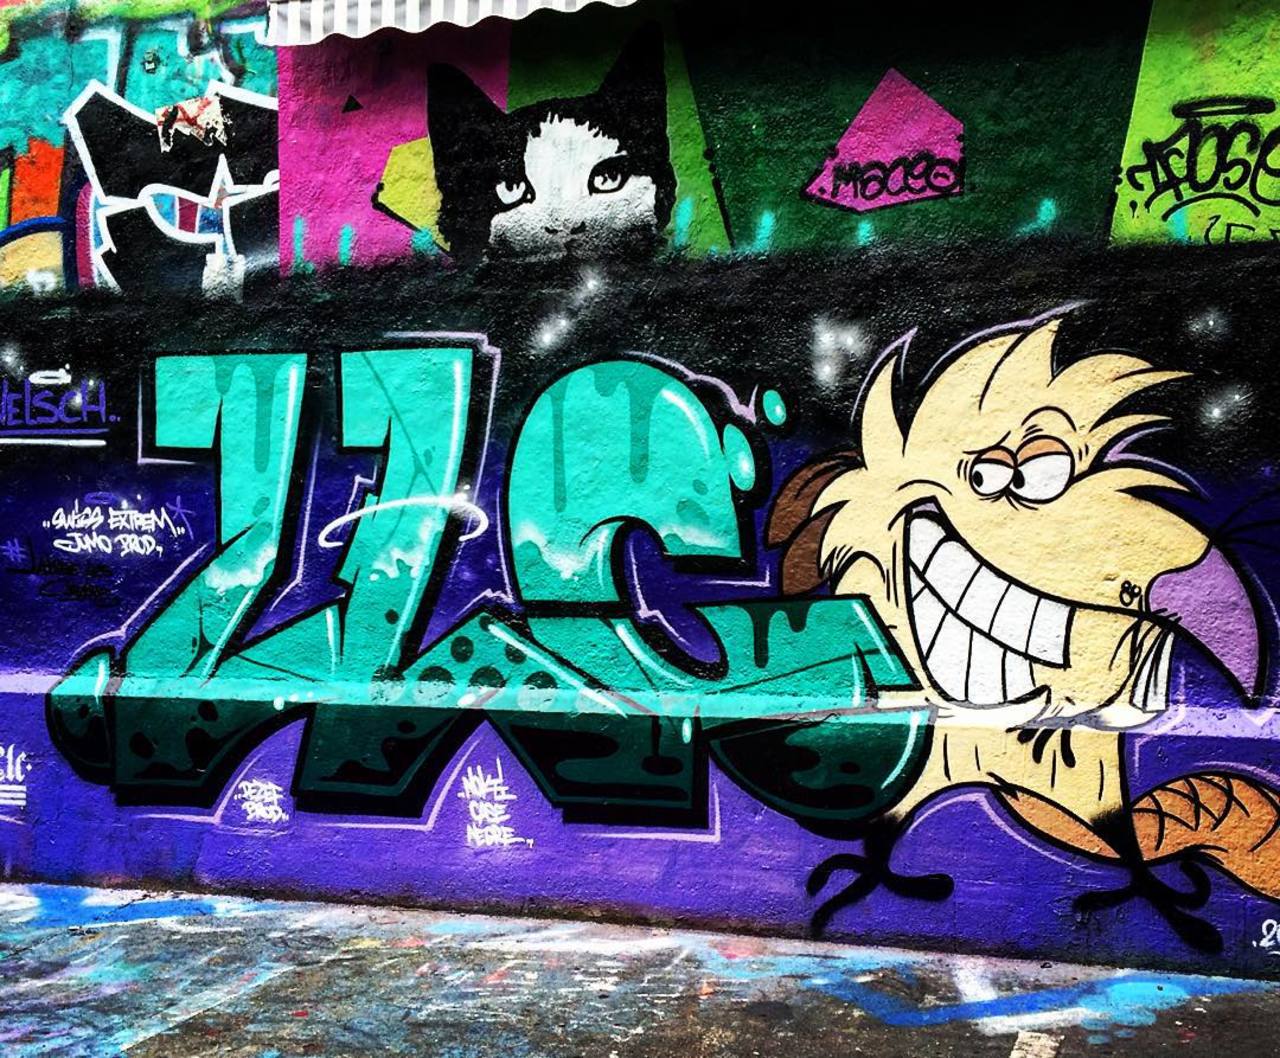 #Paris #graffiti photo by @julosteart http://ift.tt/1hDFi5J #StreetArt http://t.co/XgpFaCfHG6